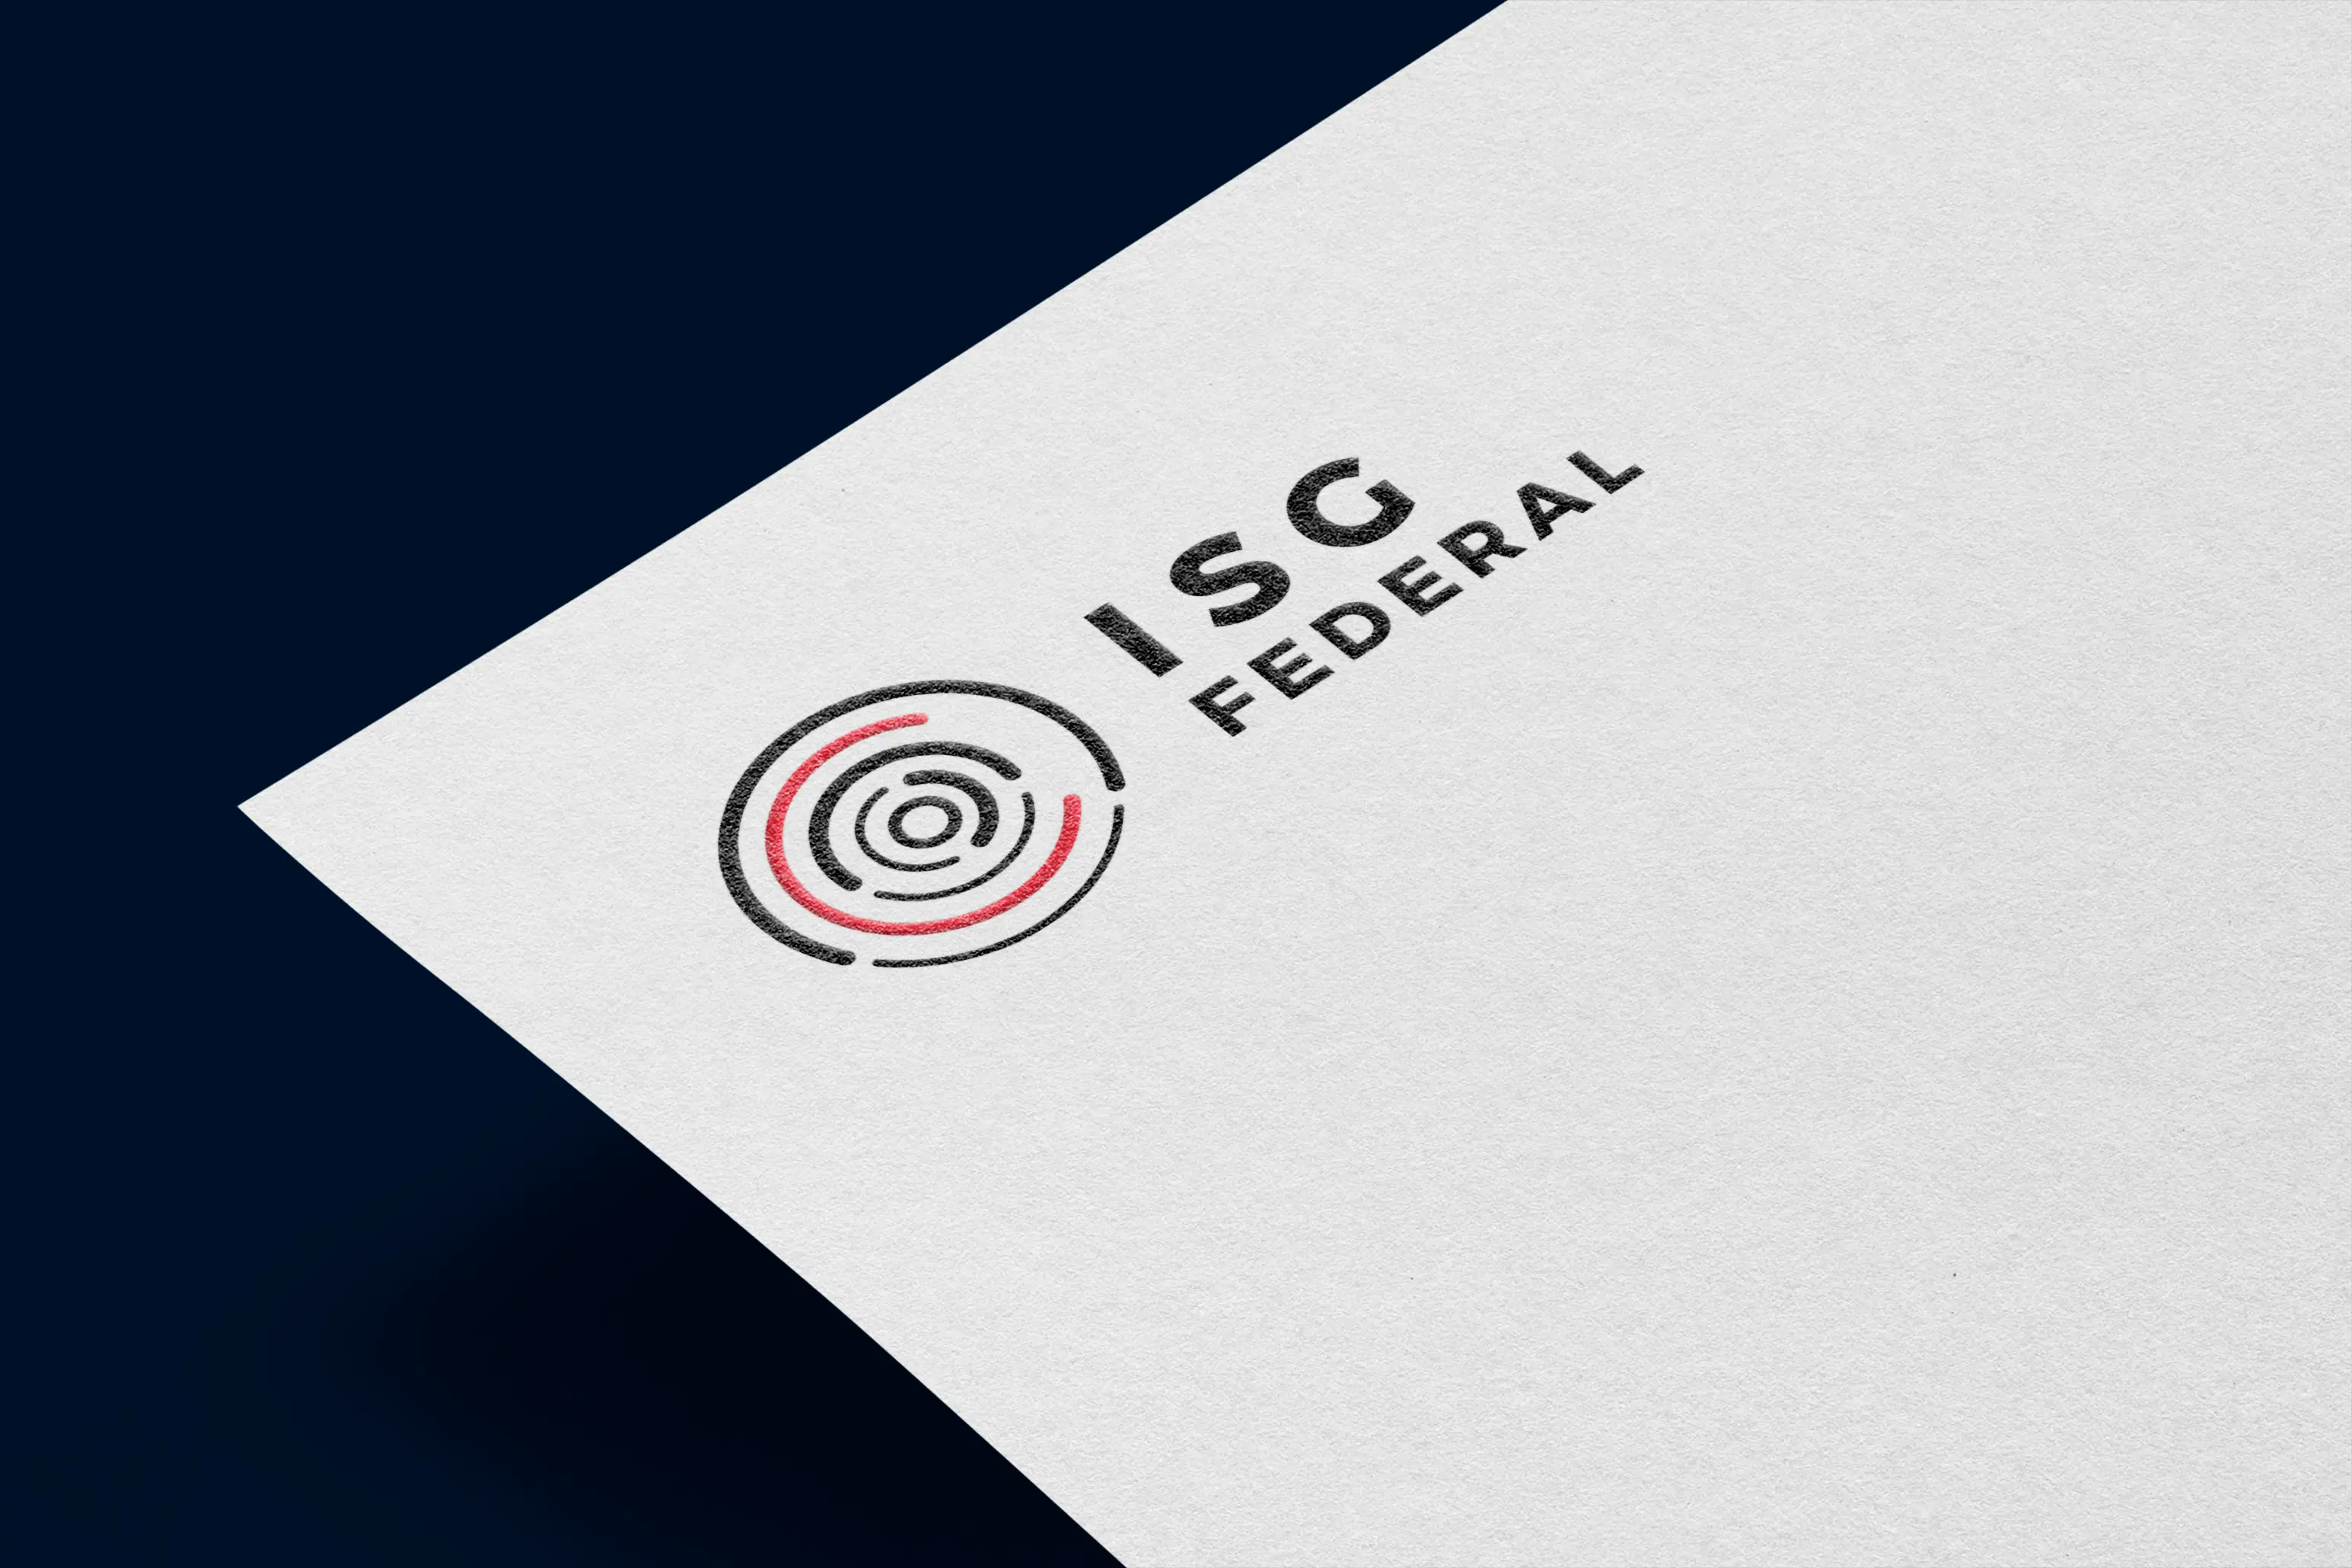 project isg logo 1